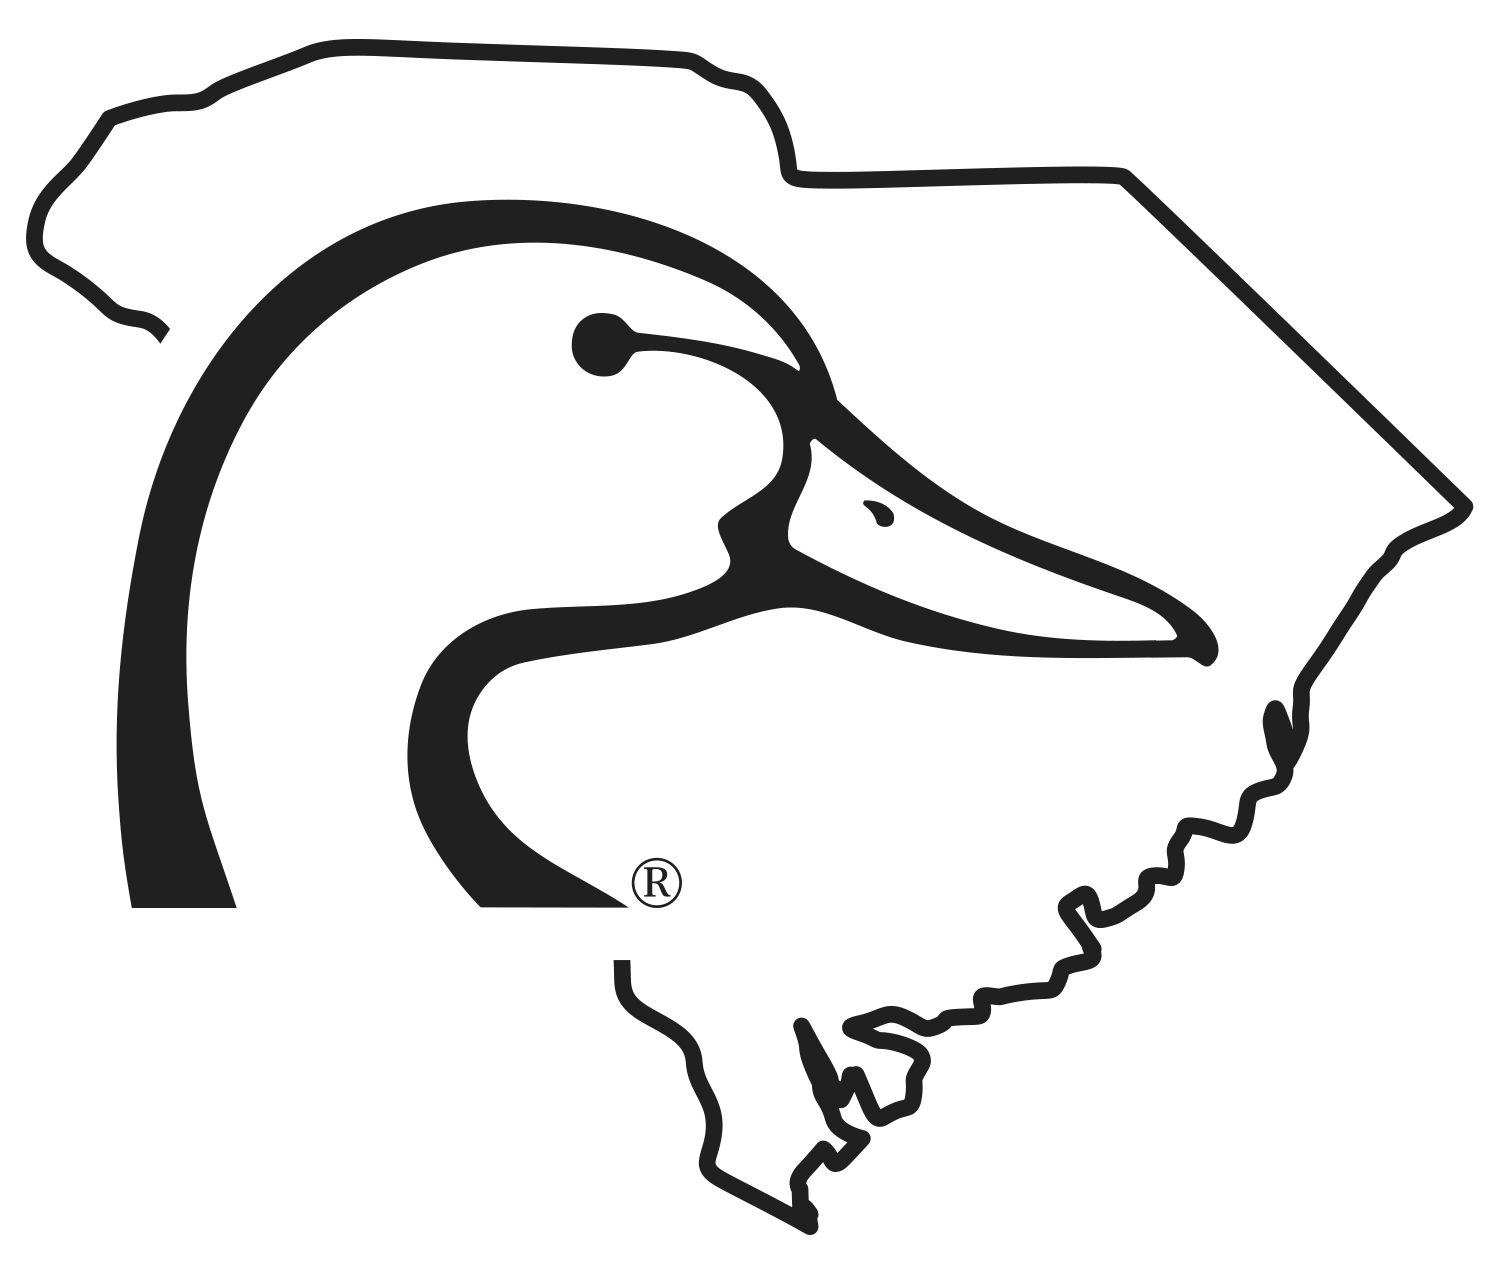 South Carolina  Ducks Unlimited